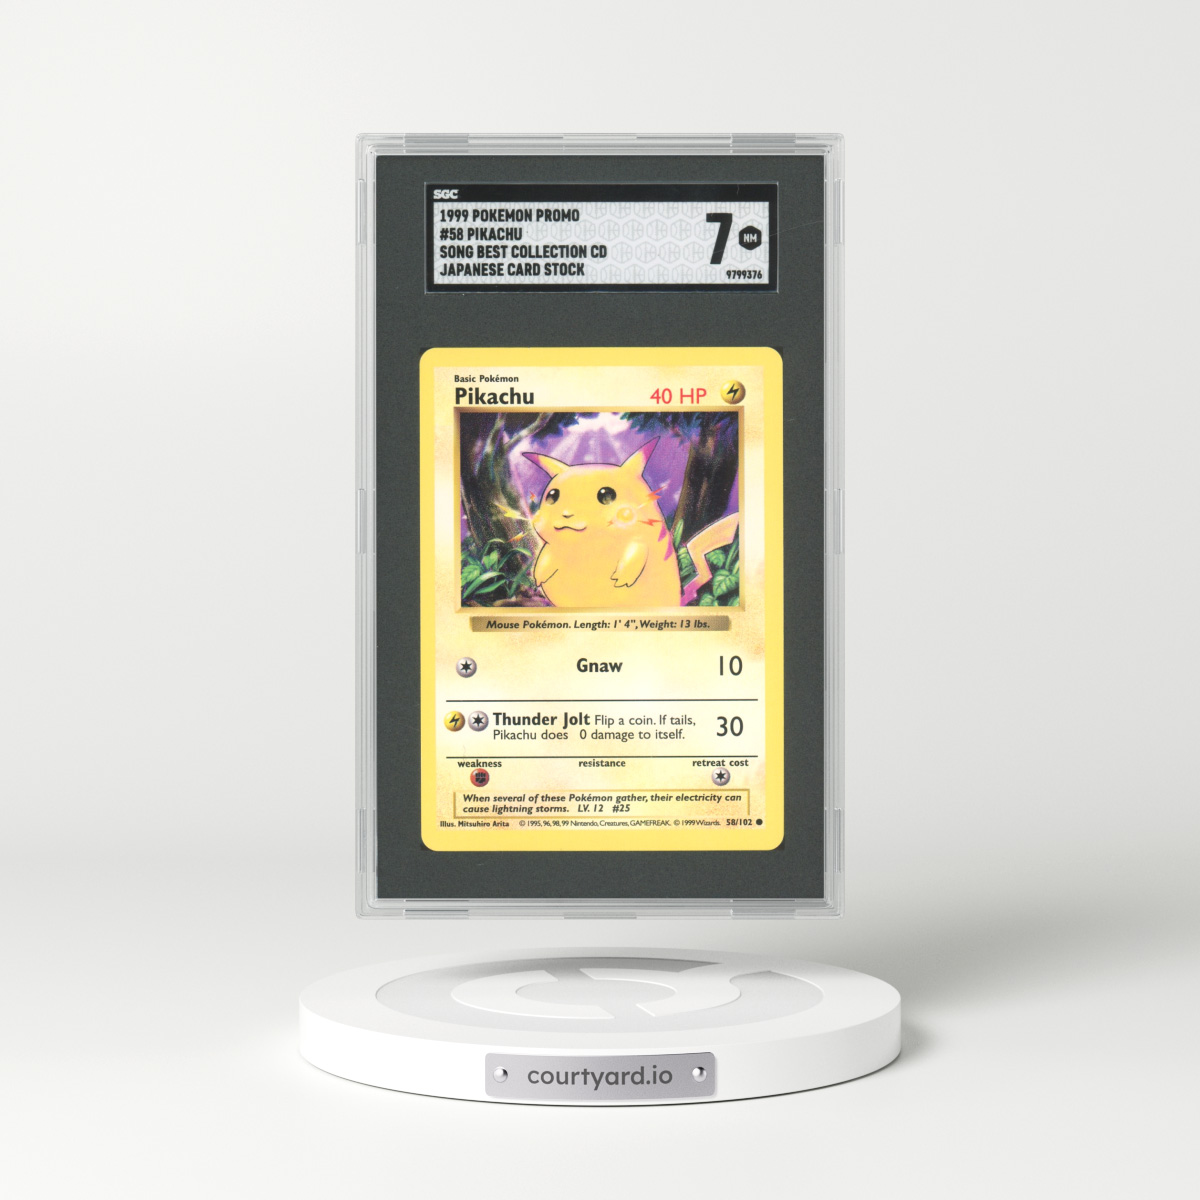 1999 CD Promo #58 Pikachu - Shadowless Japanese Card Stock (SGC 7 NM)